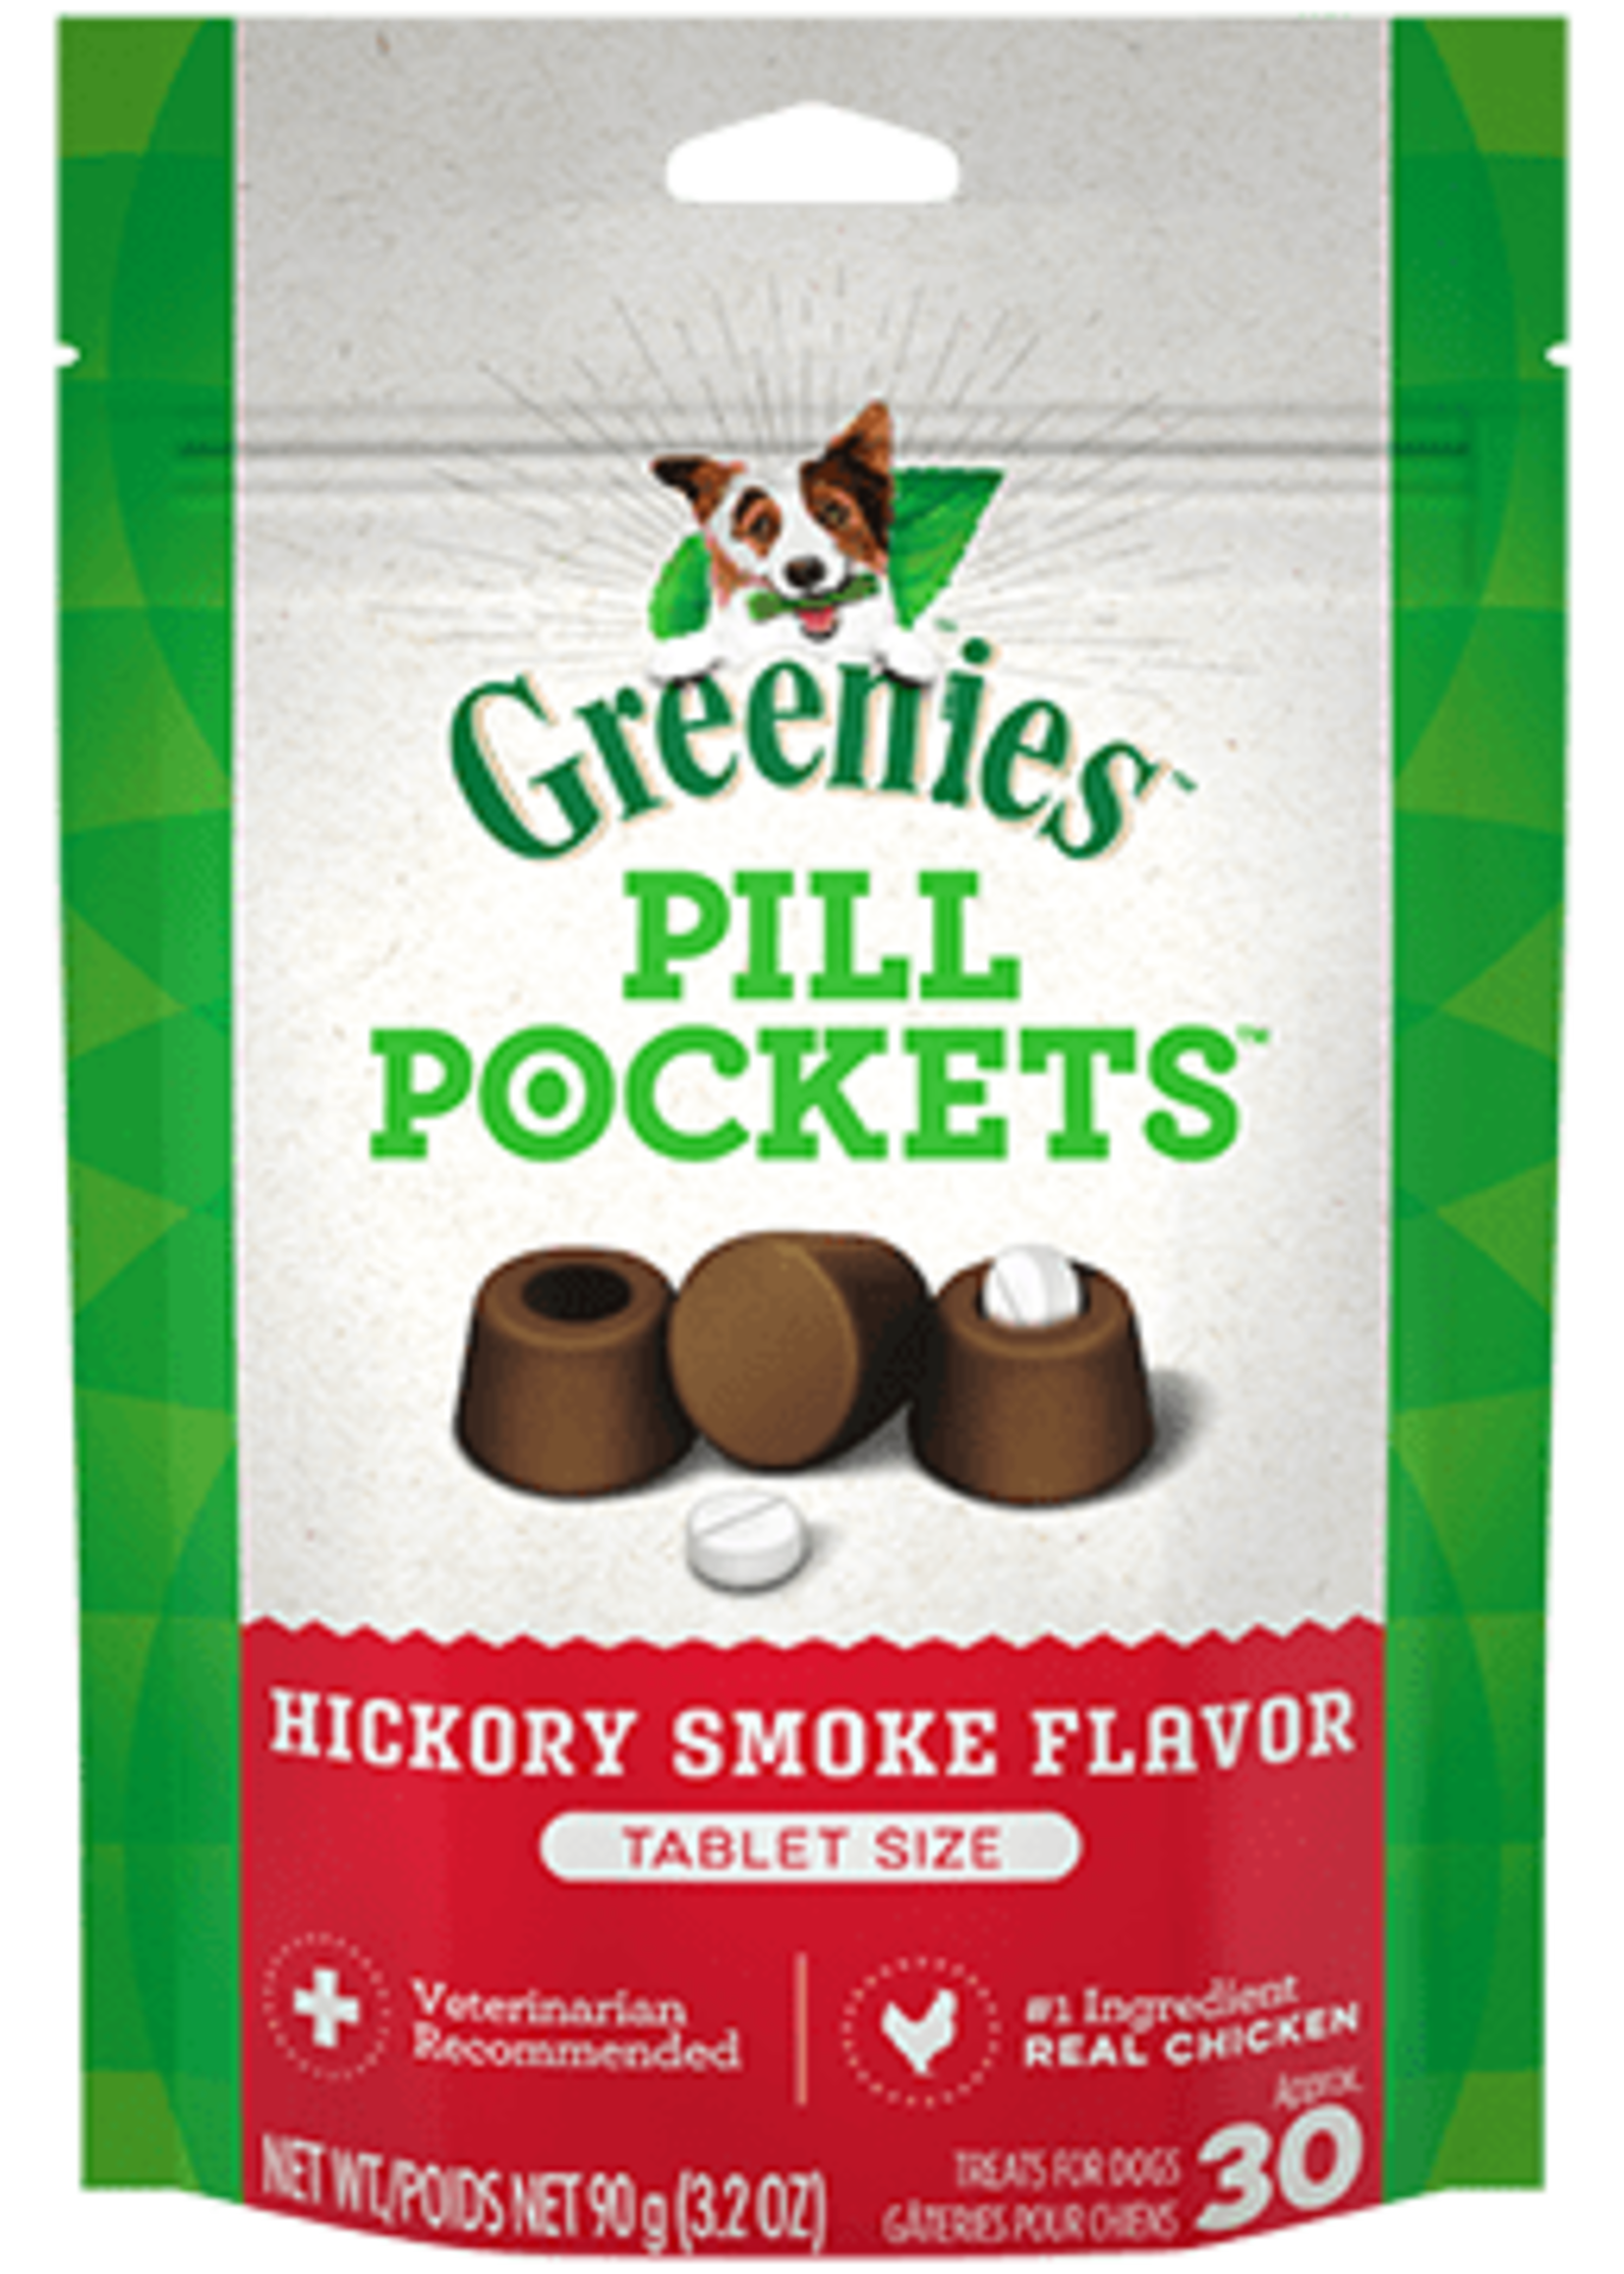 Greenies Greenies Pill Pockets Hickory Smoke 3.2OZ Tablet